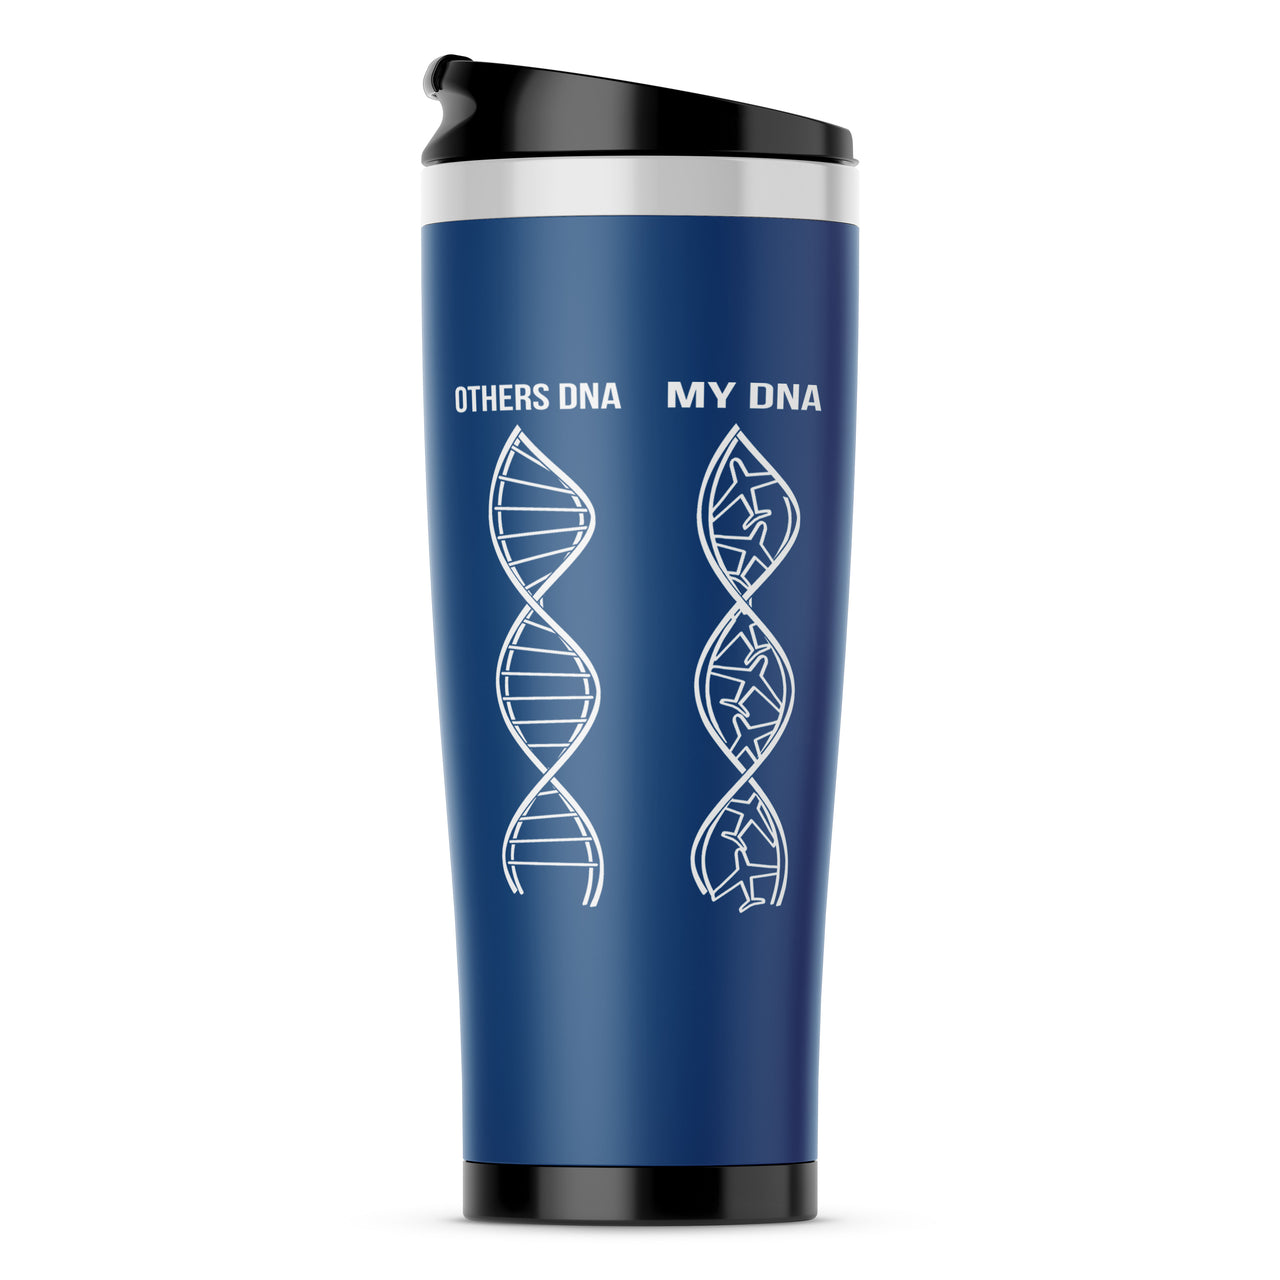 Aviation DNA Designed Travel Mugs